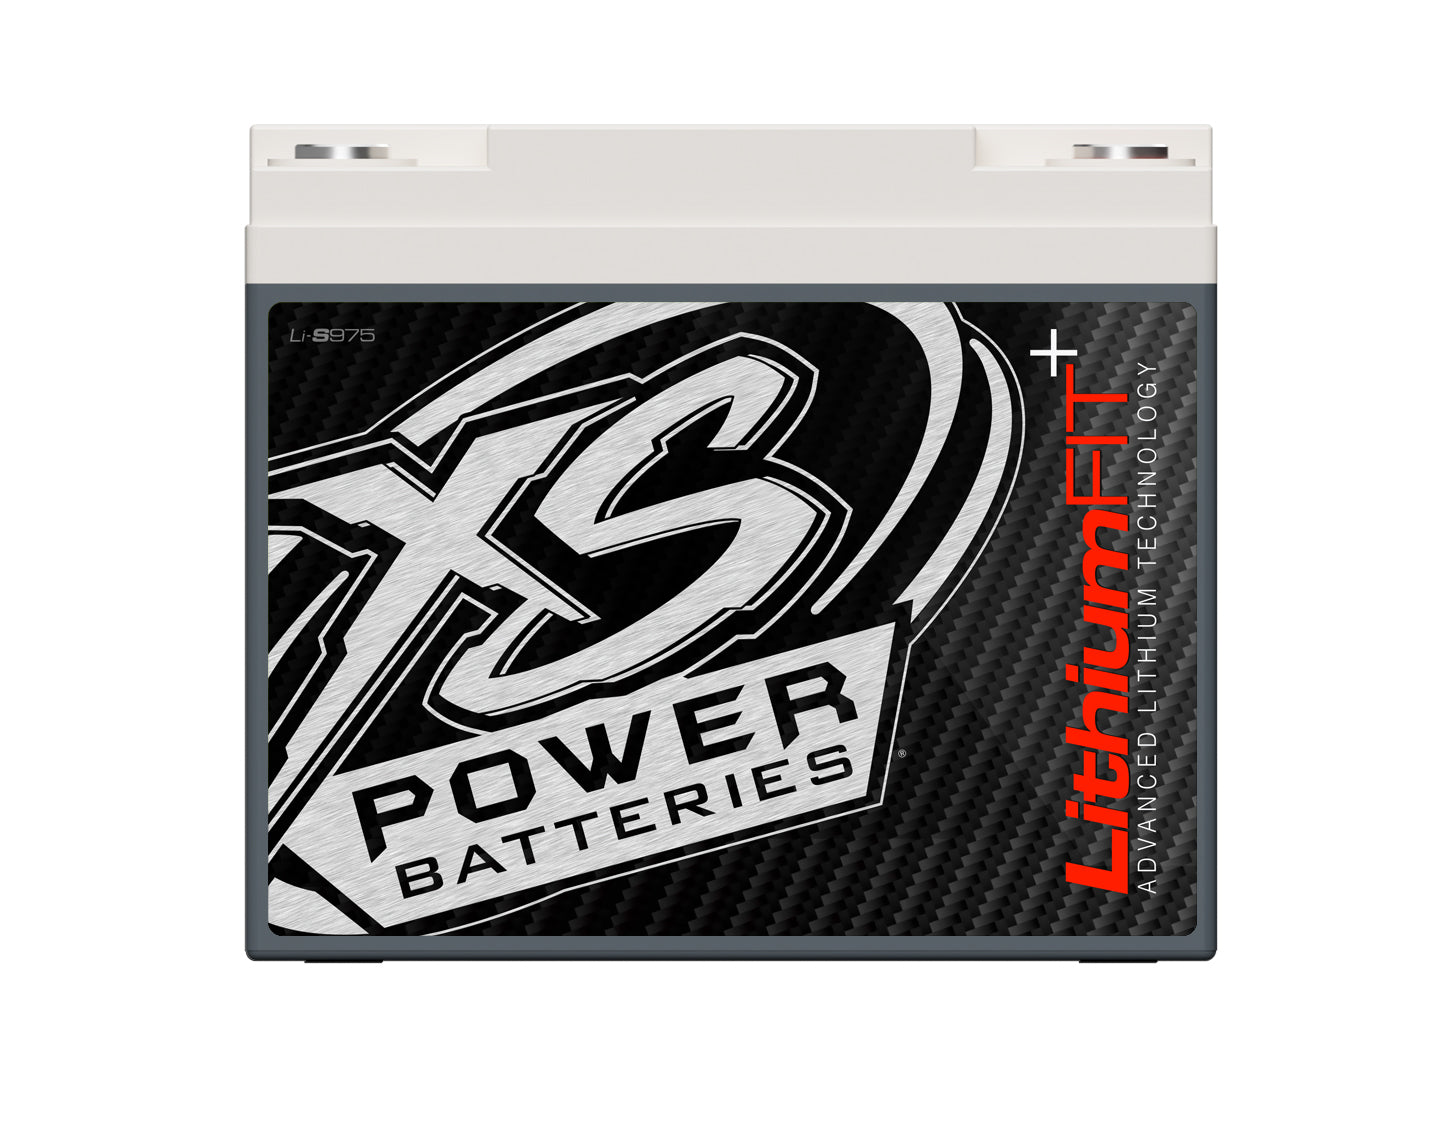 Li-S975 XS Power 12VDC Lithium Racing Battery 2880A 31.2Ah Group U1R